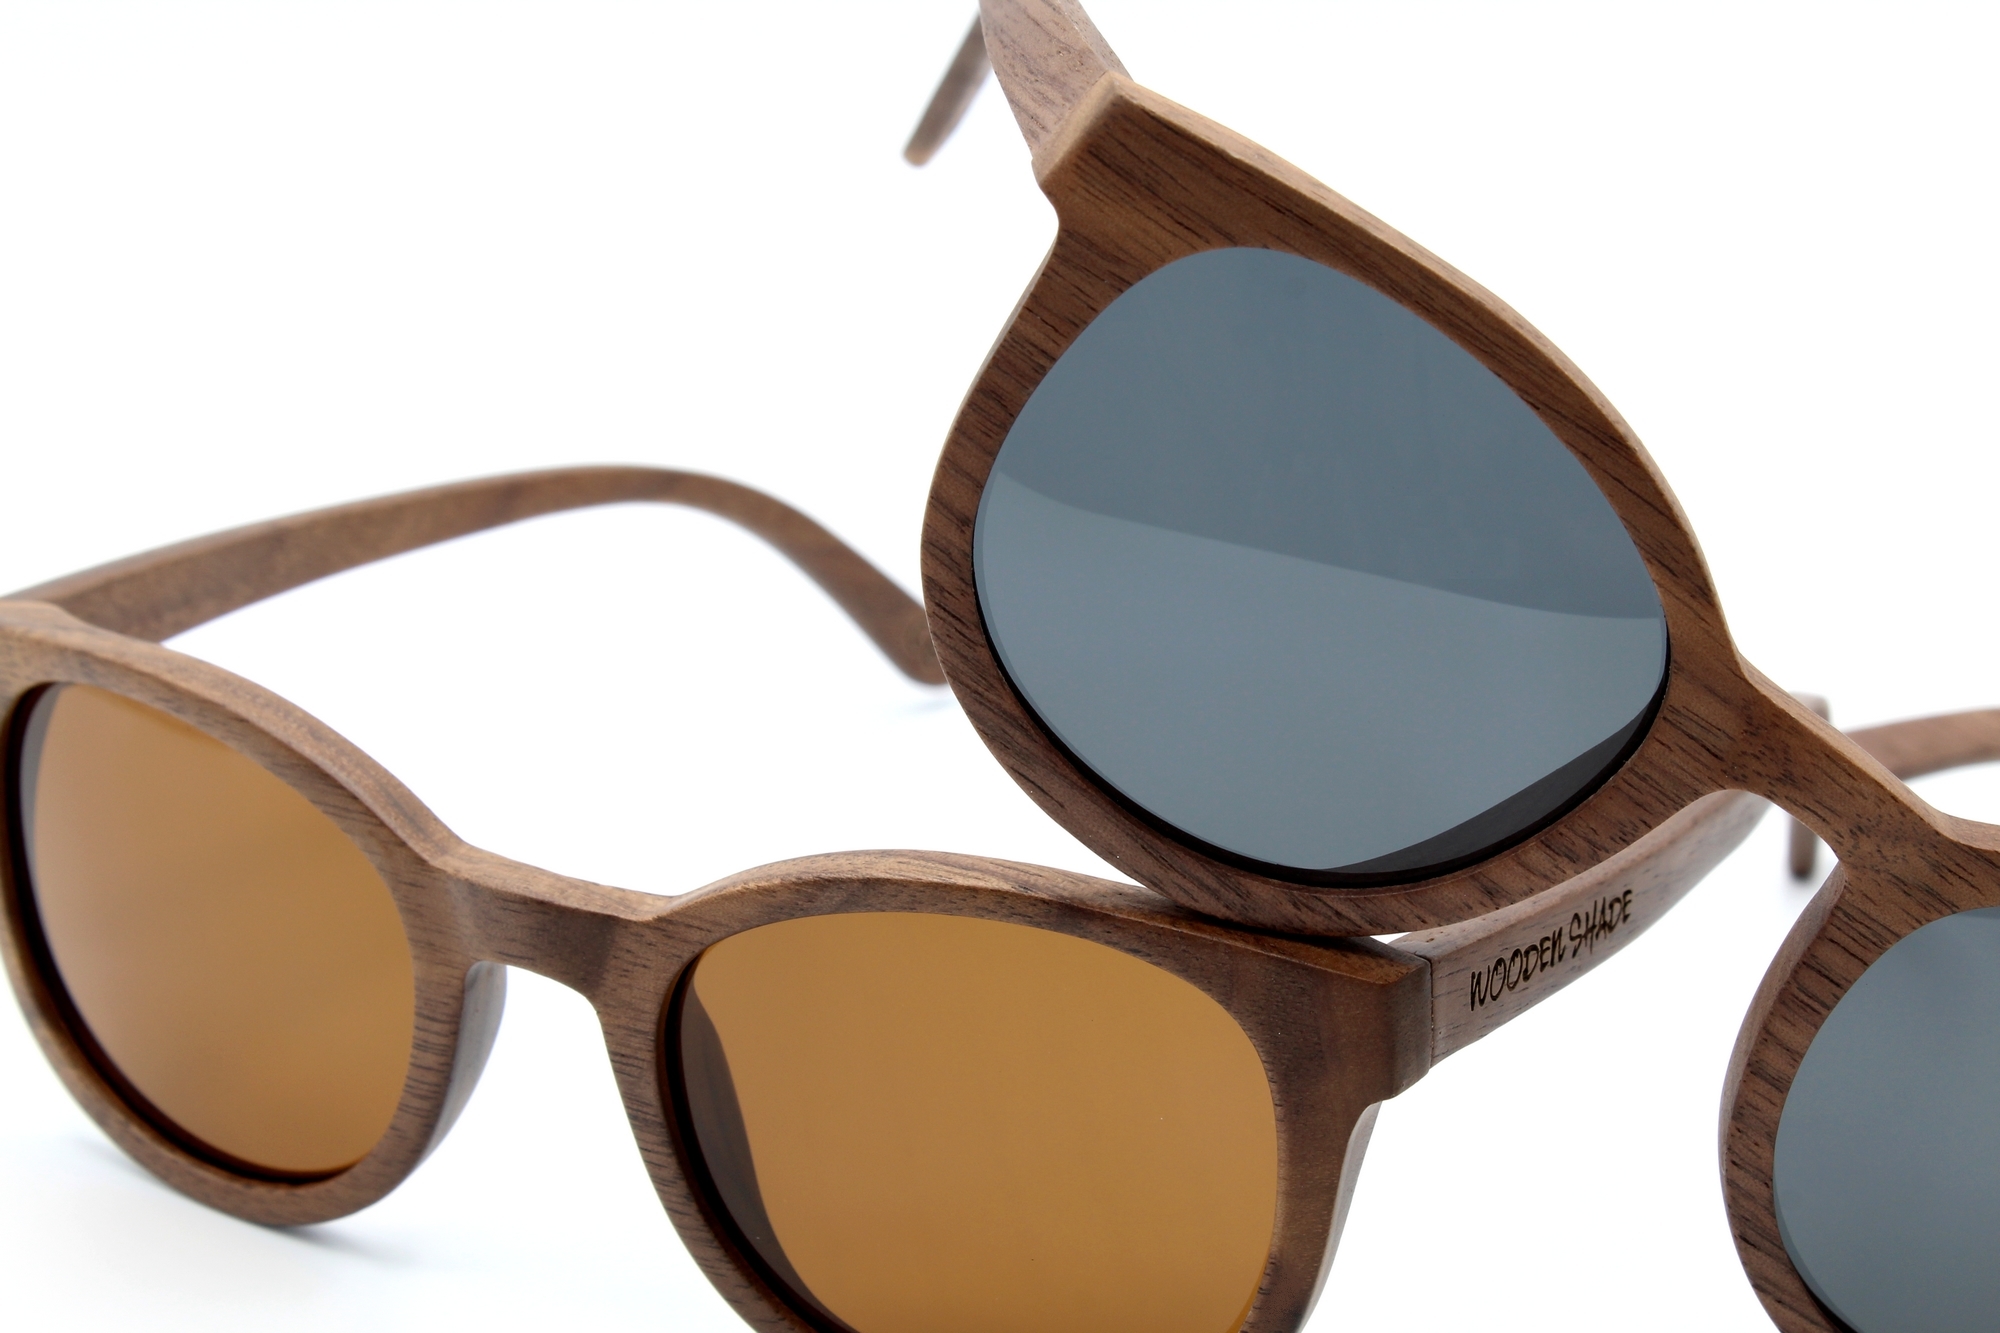 Keola Walnuss Holz Damen Sonnenbrille Schwarz Braun women wood sunglasses 2019 wooden shade